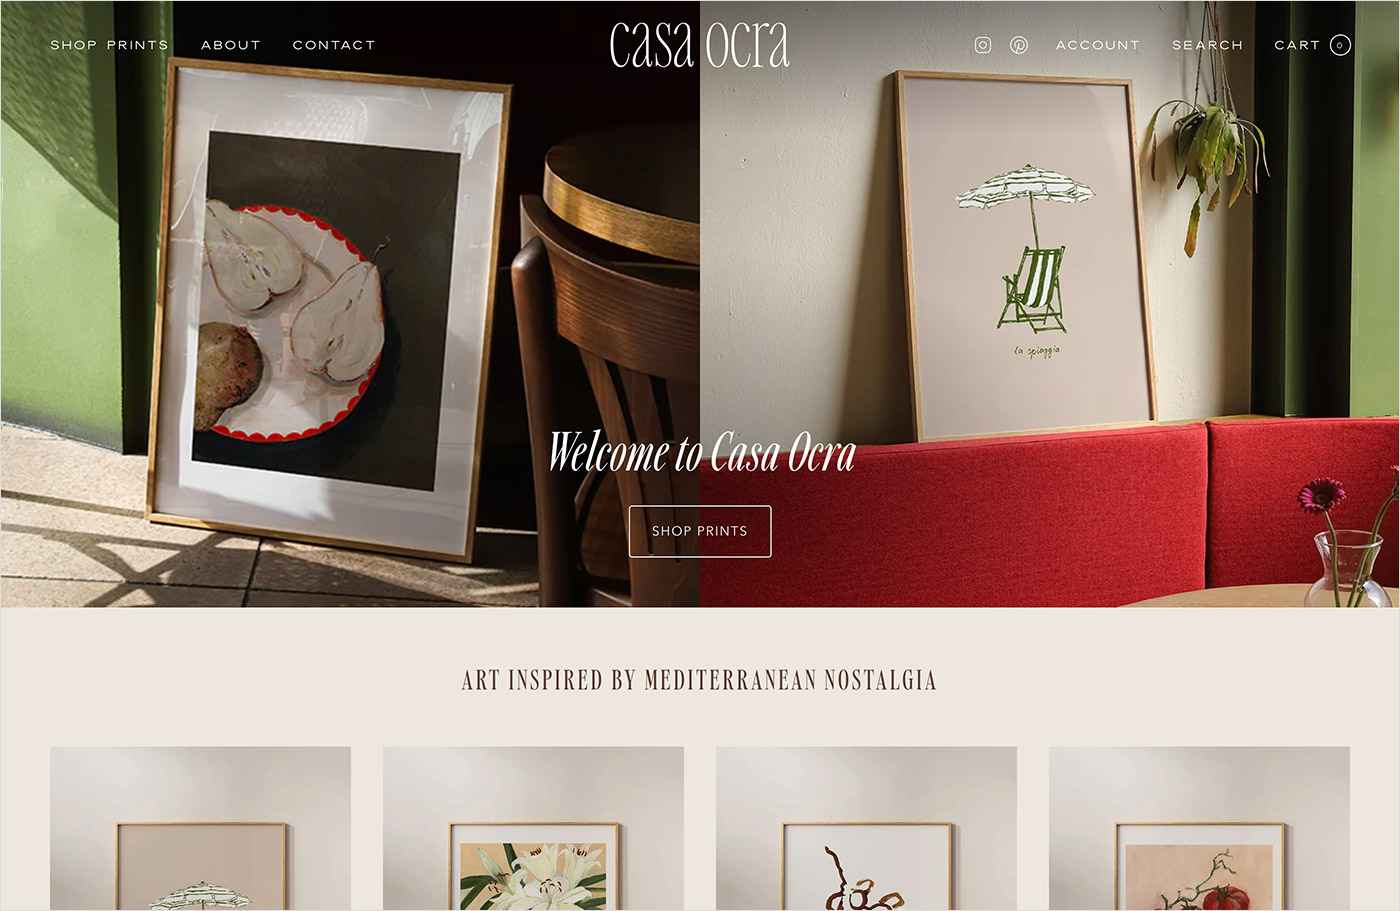 Casa Ocraウェブサイトの画面キャプチャ画像